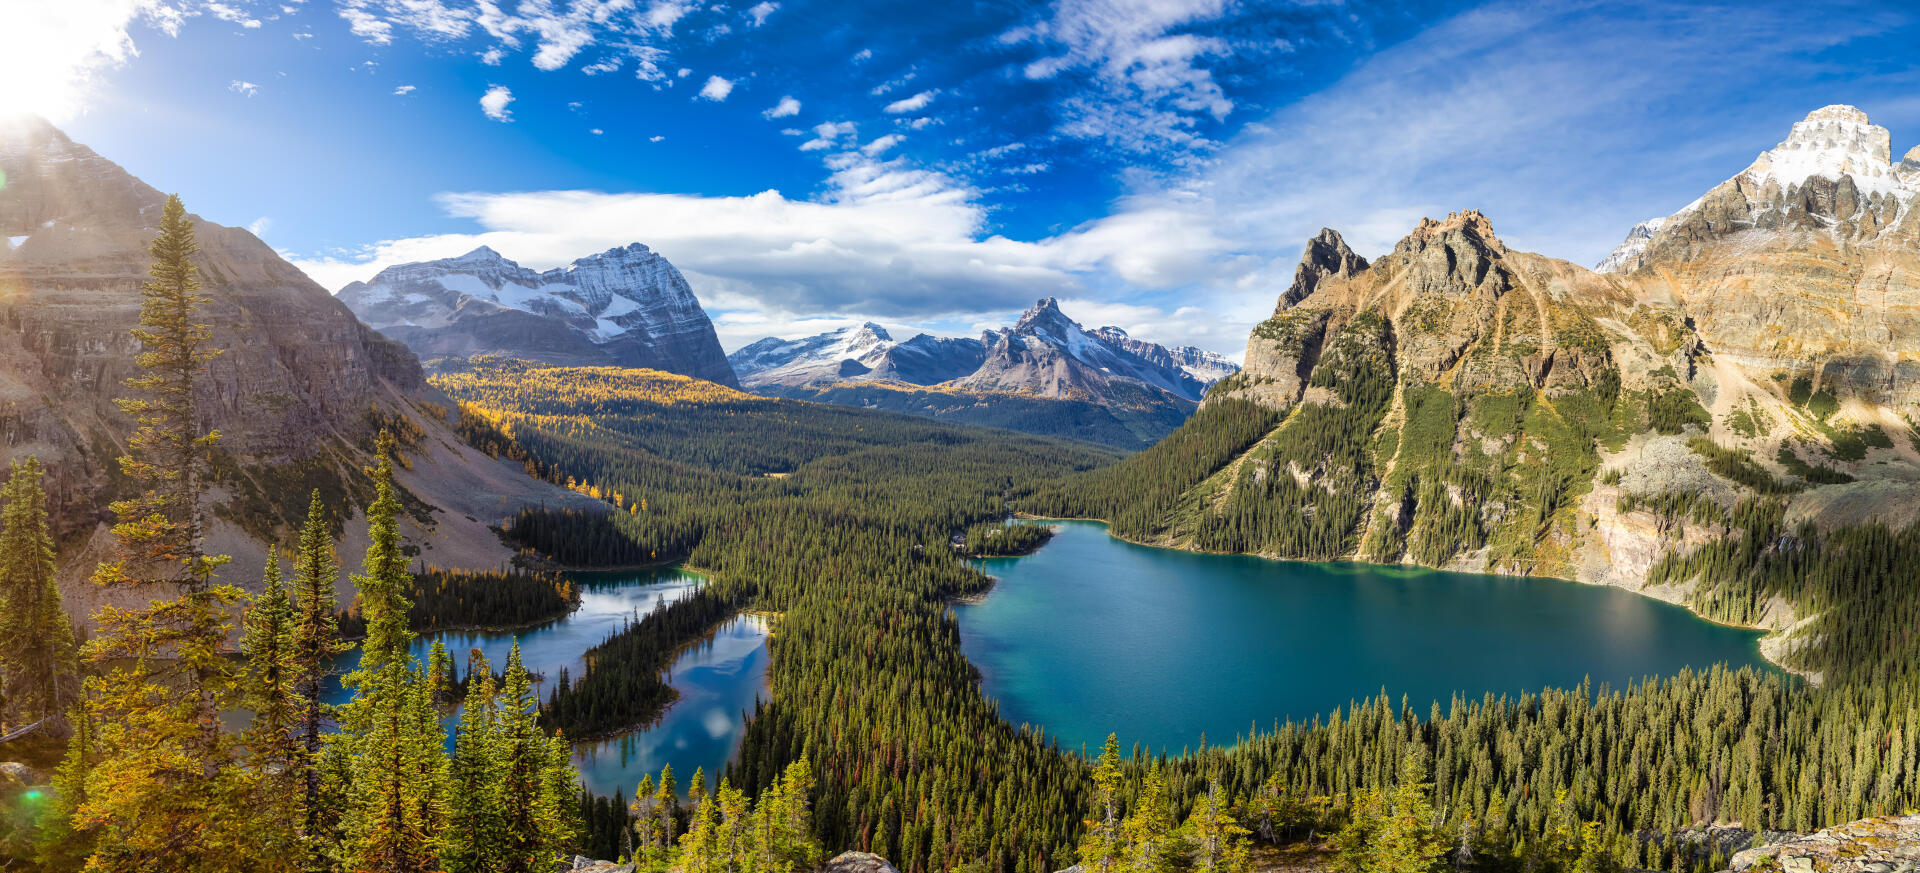 Inspiration: 5 trekking ideas in Canada